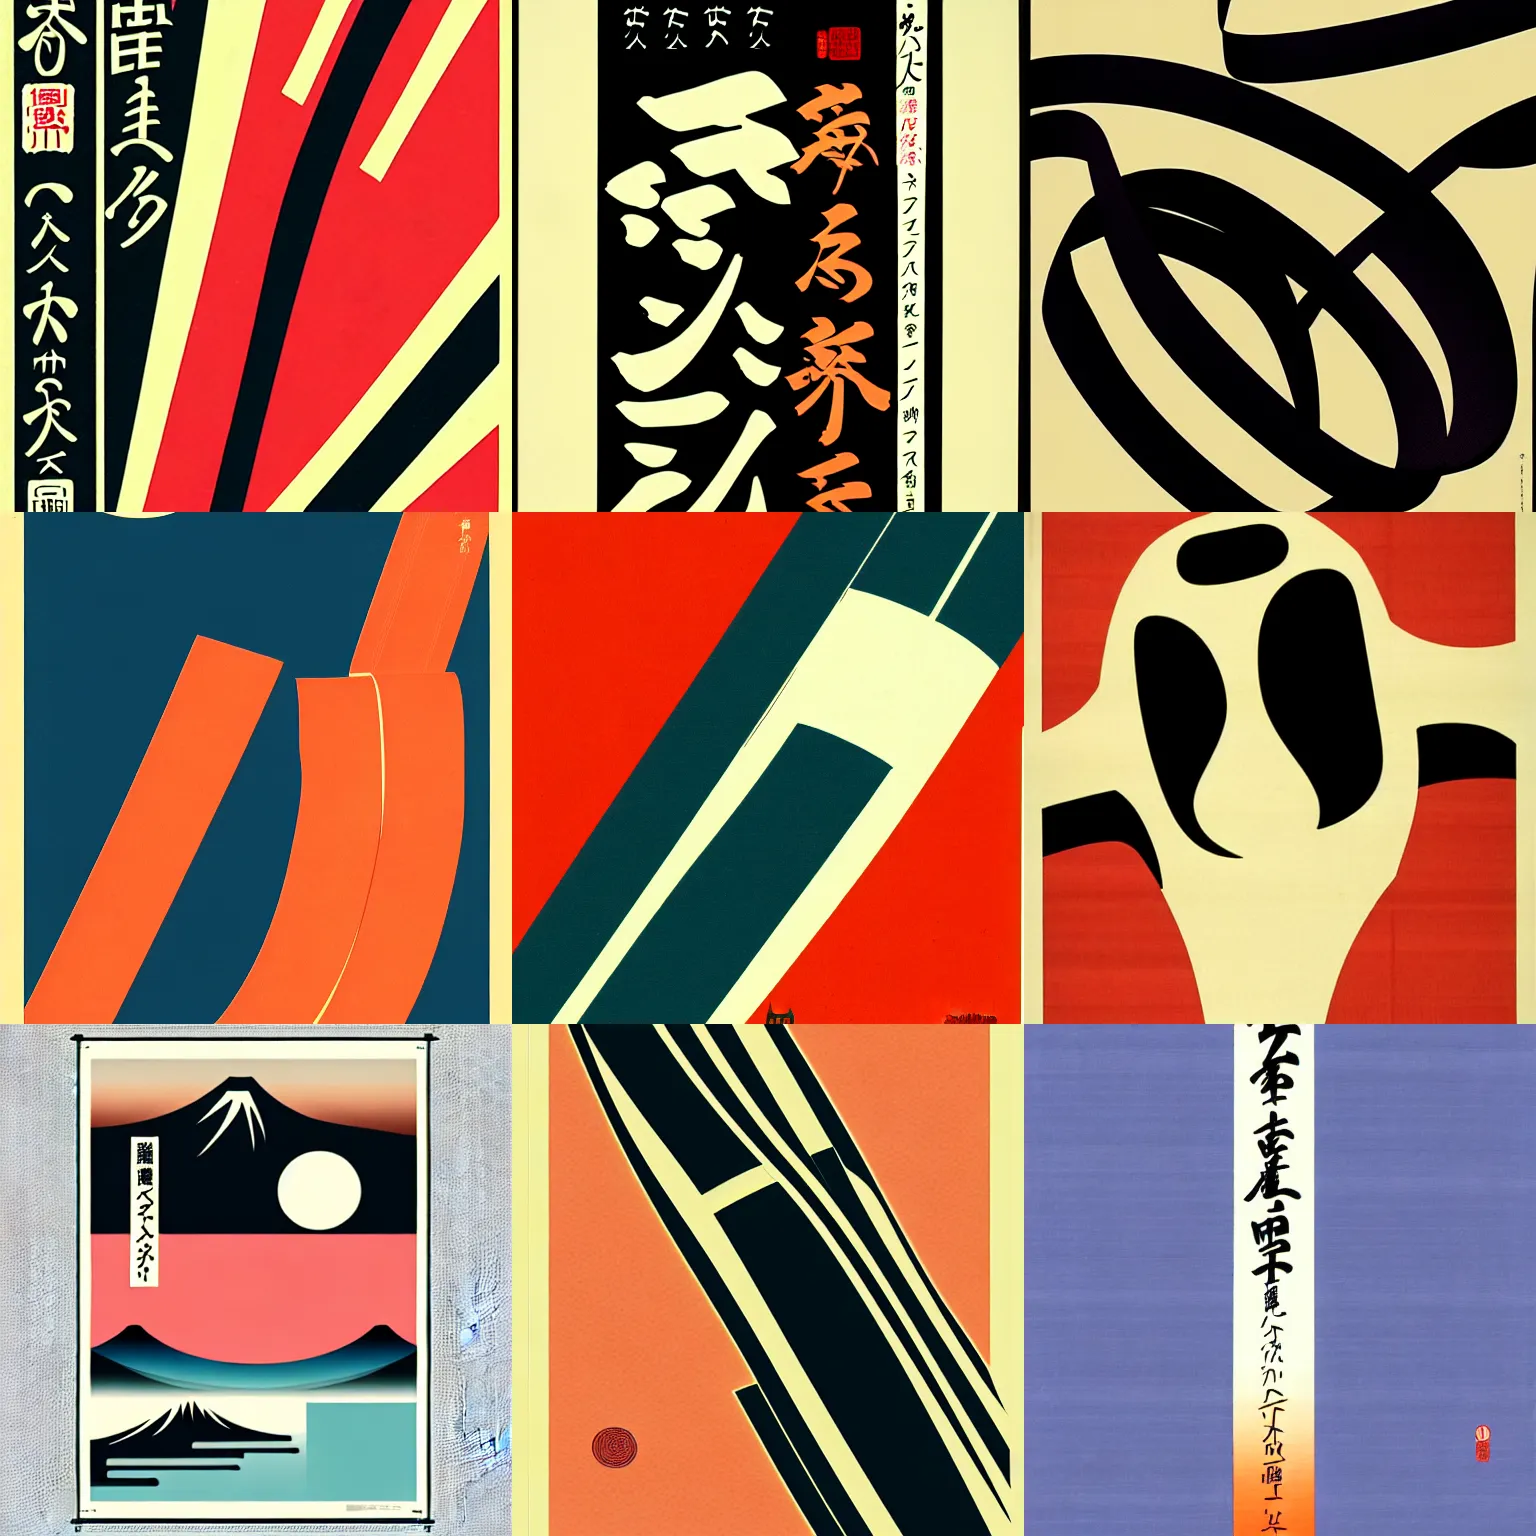 Prompt: japanese graphic poster, obi strip